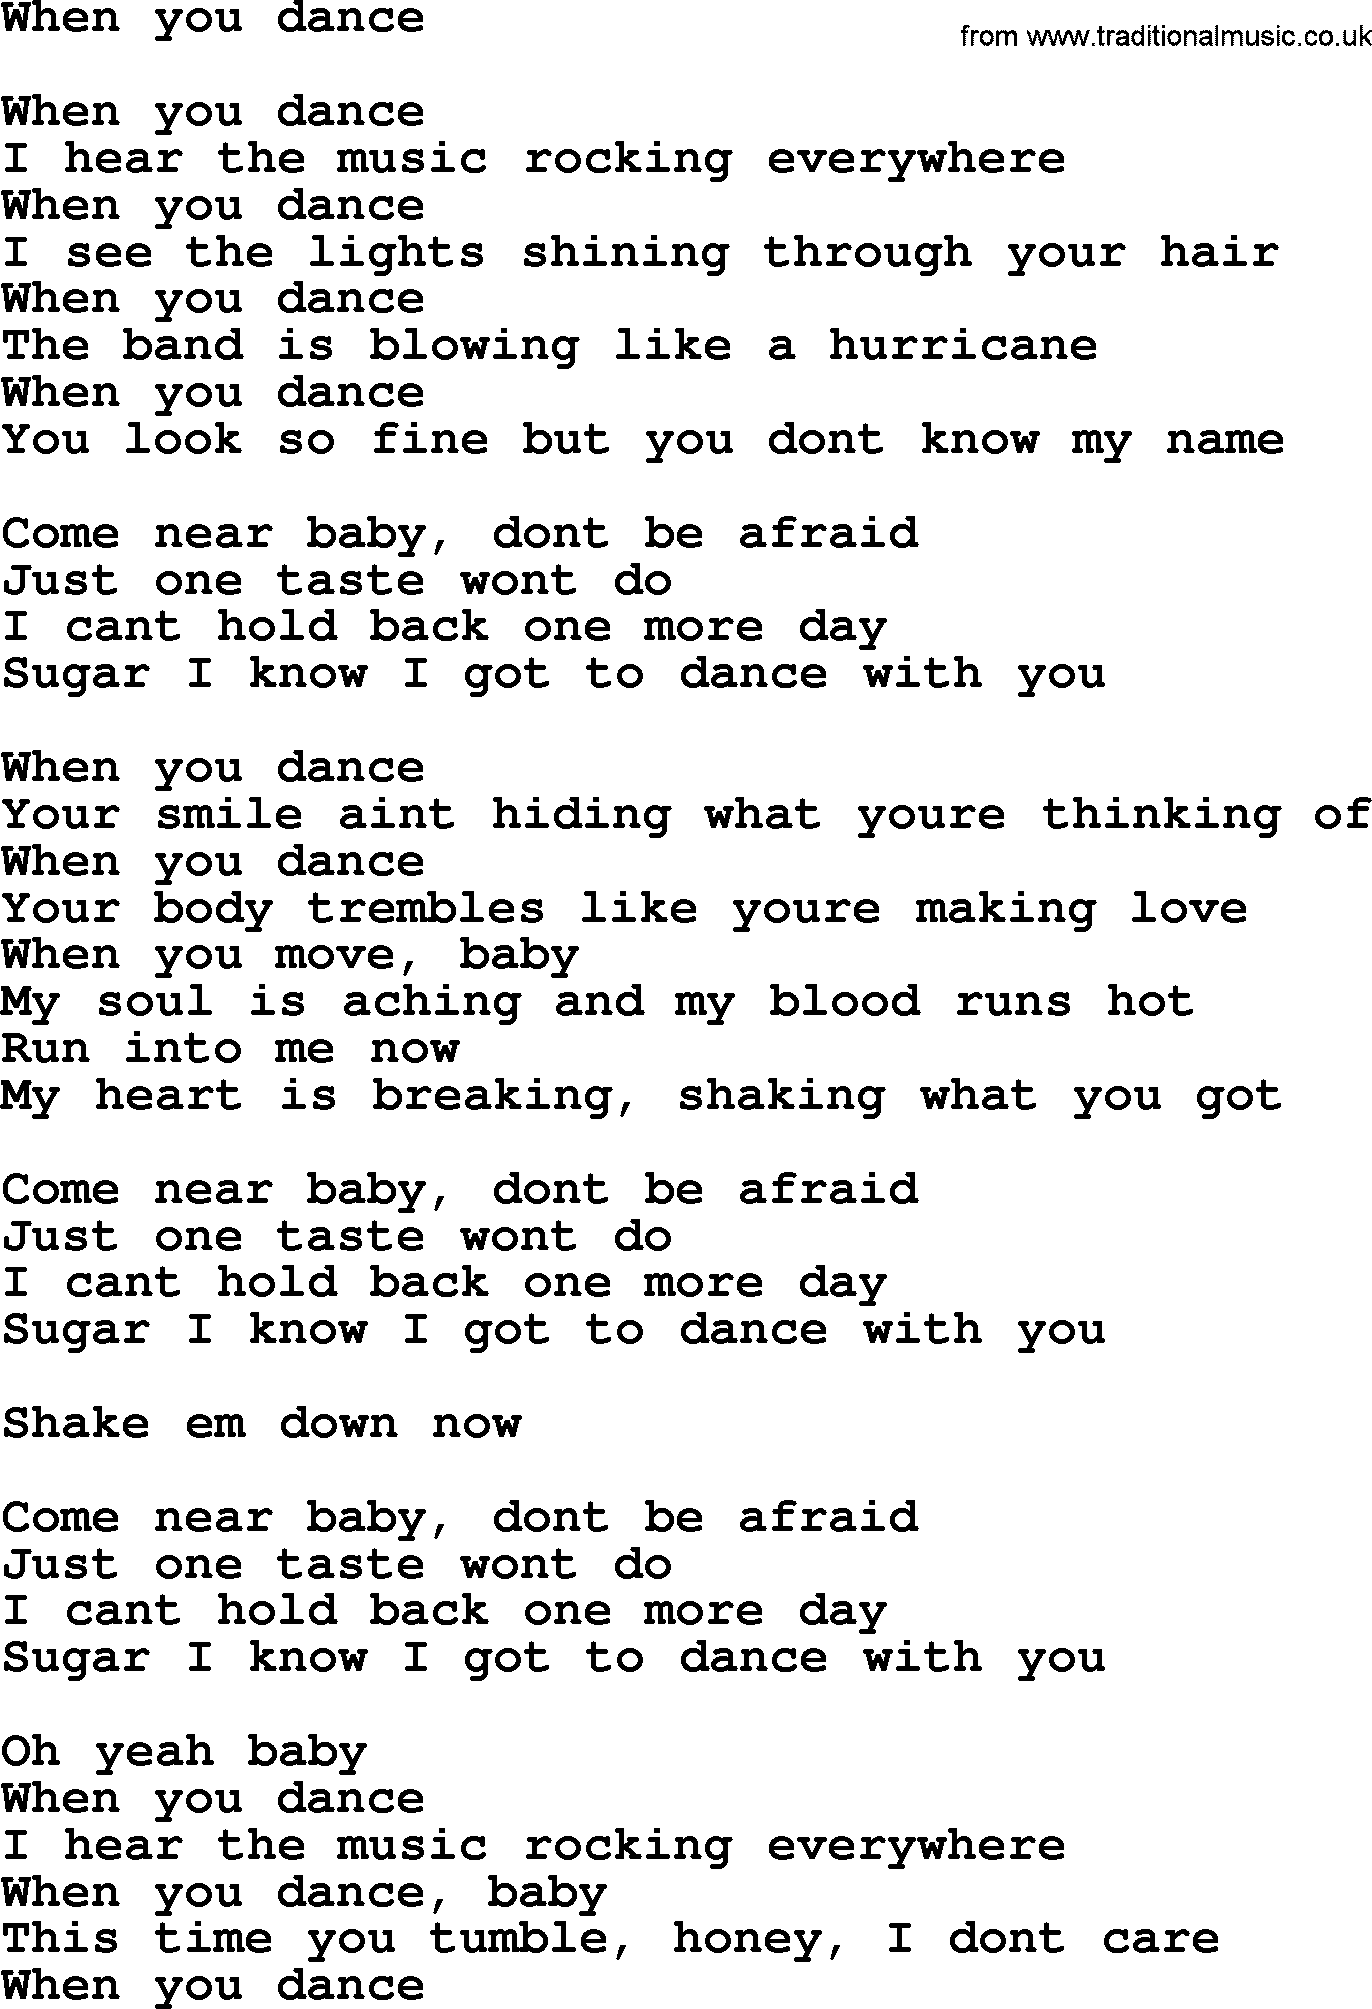 Bruce Springsteen song: When You Dance lyrics